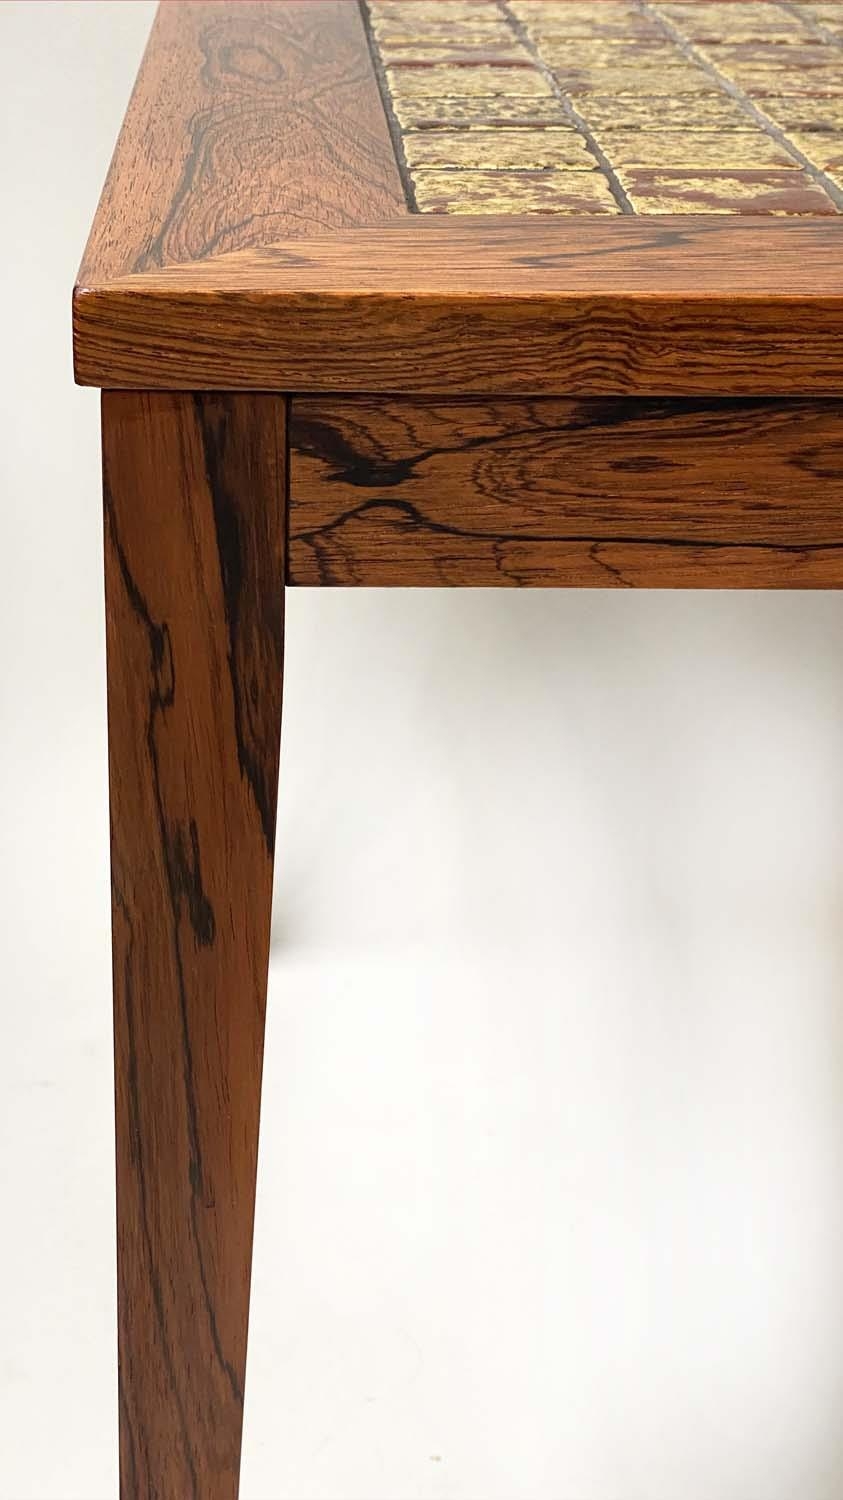 LOW TABLE, vintage exotic wood veneered and tiled, 168cm x 62cm x 51cm H. - Image 3 of 8